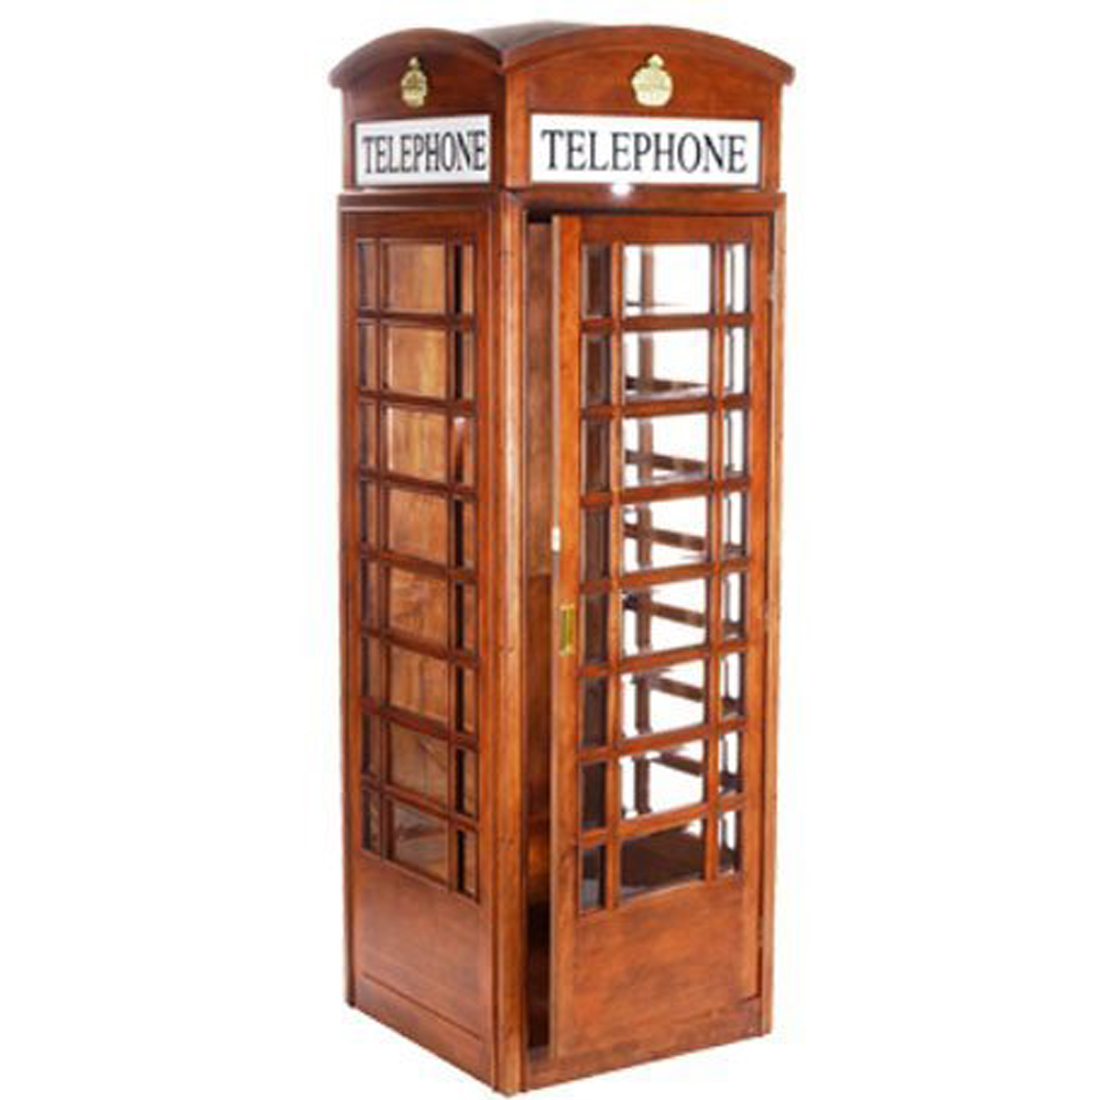 English-Style-Replica-Telephone-Booth-in-Mahogany-1.jpg